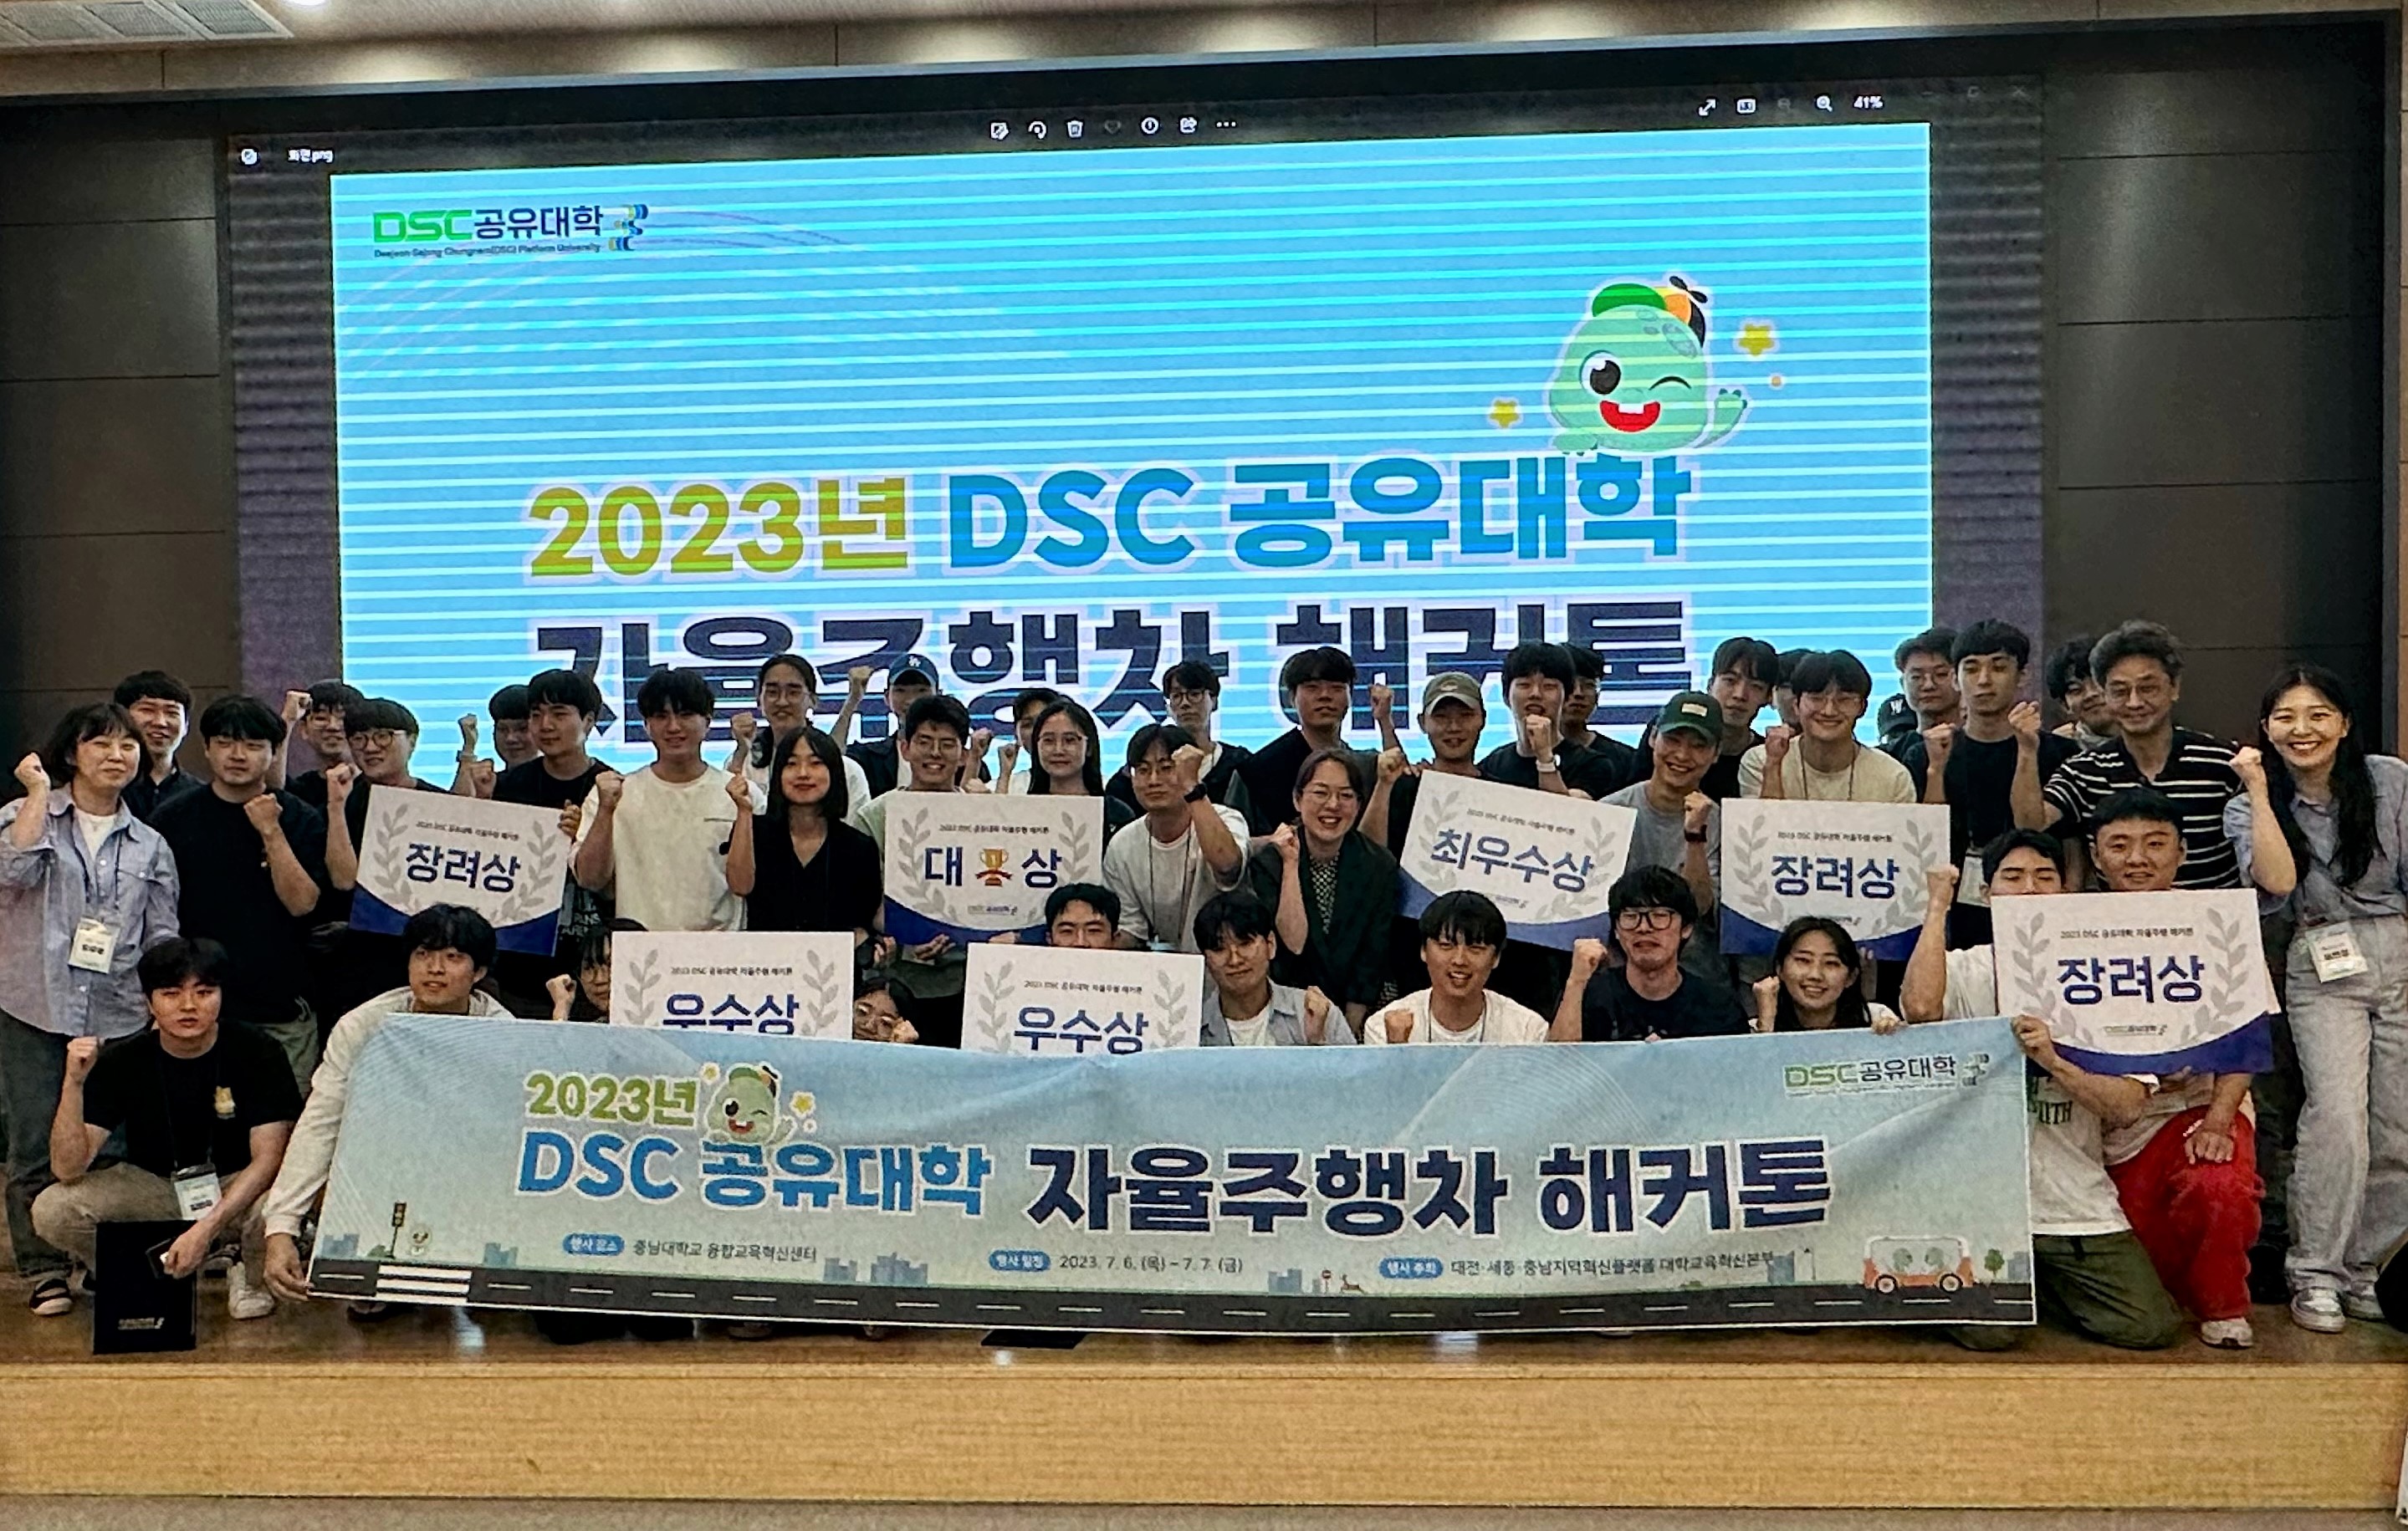 DSC 지역혁신플랫폼, ‘DSC 공유대학 자율주행차 해커톤’ 개최 사진